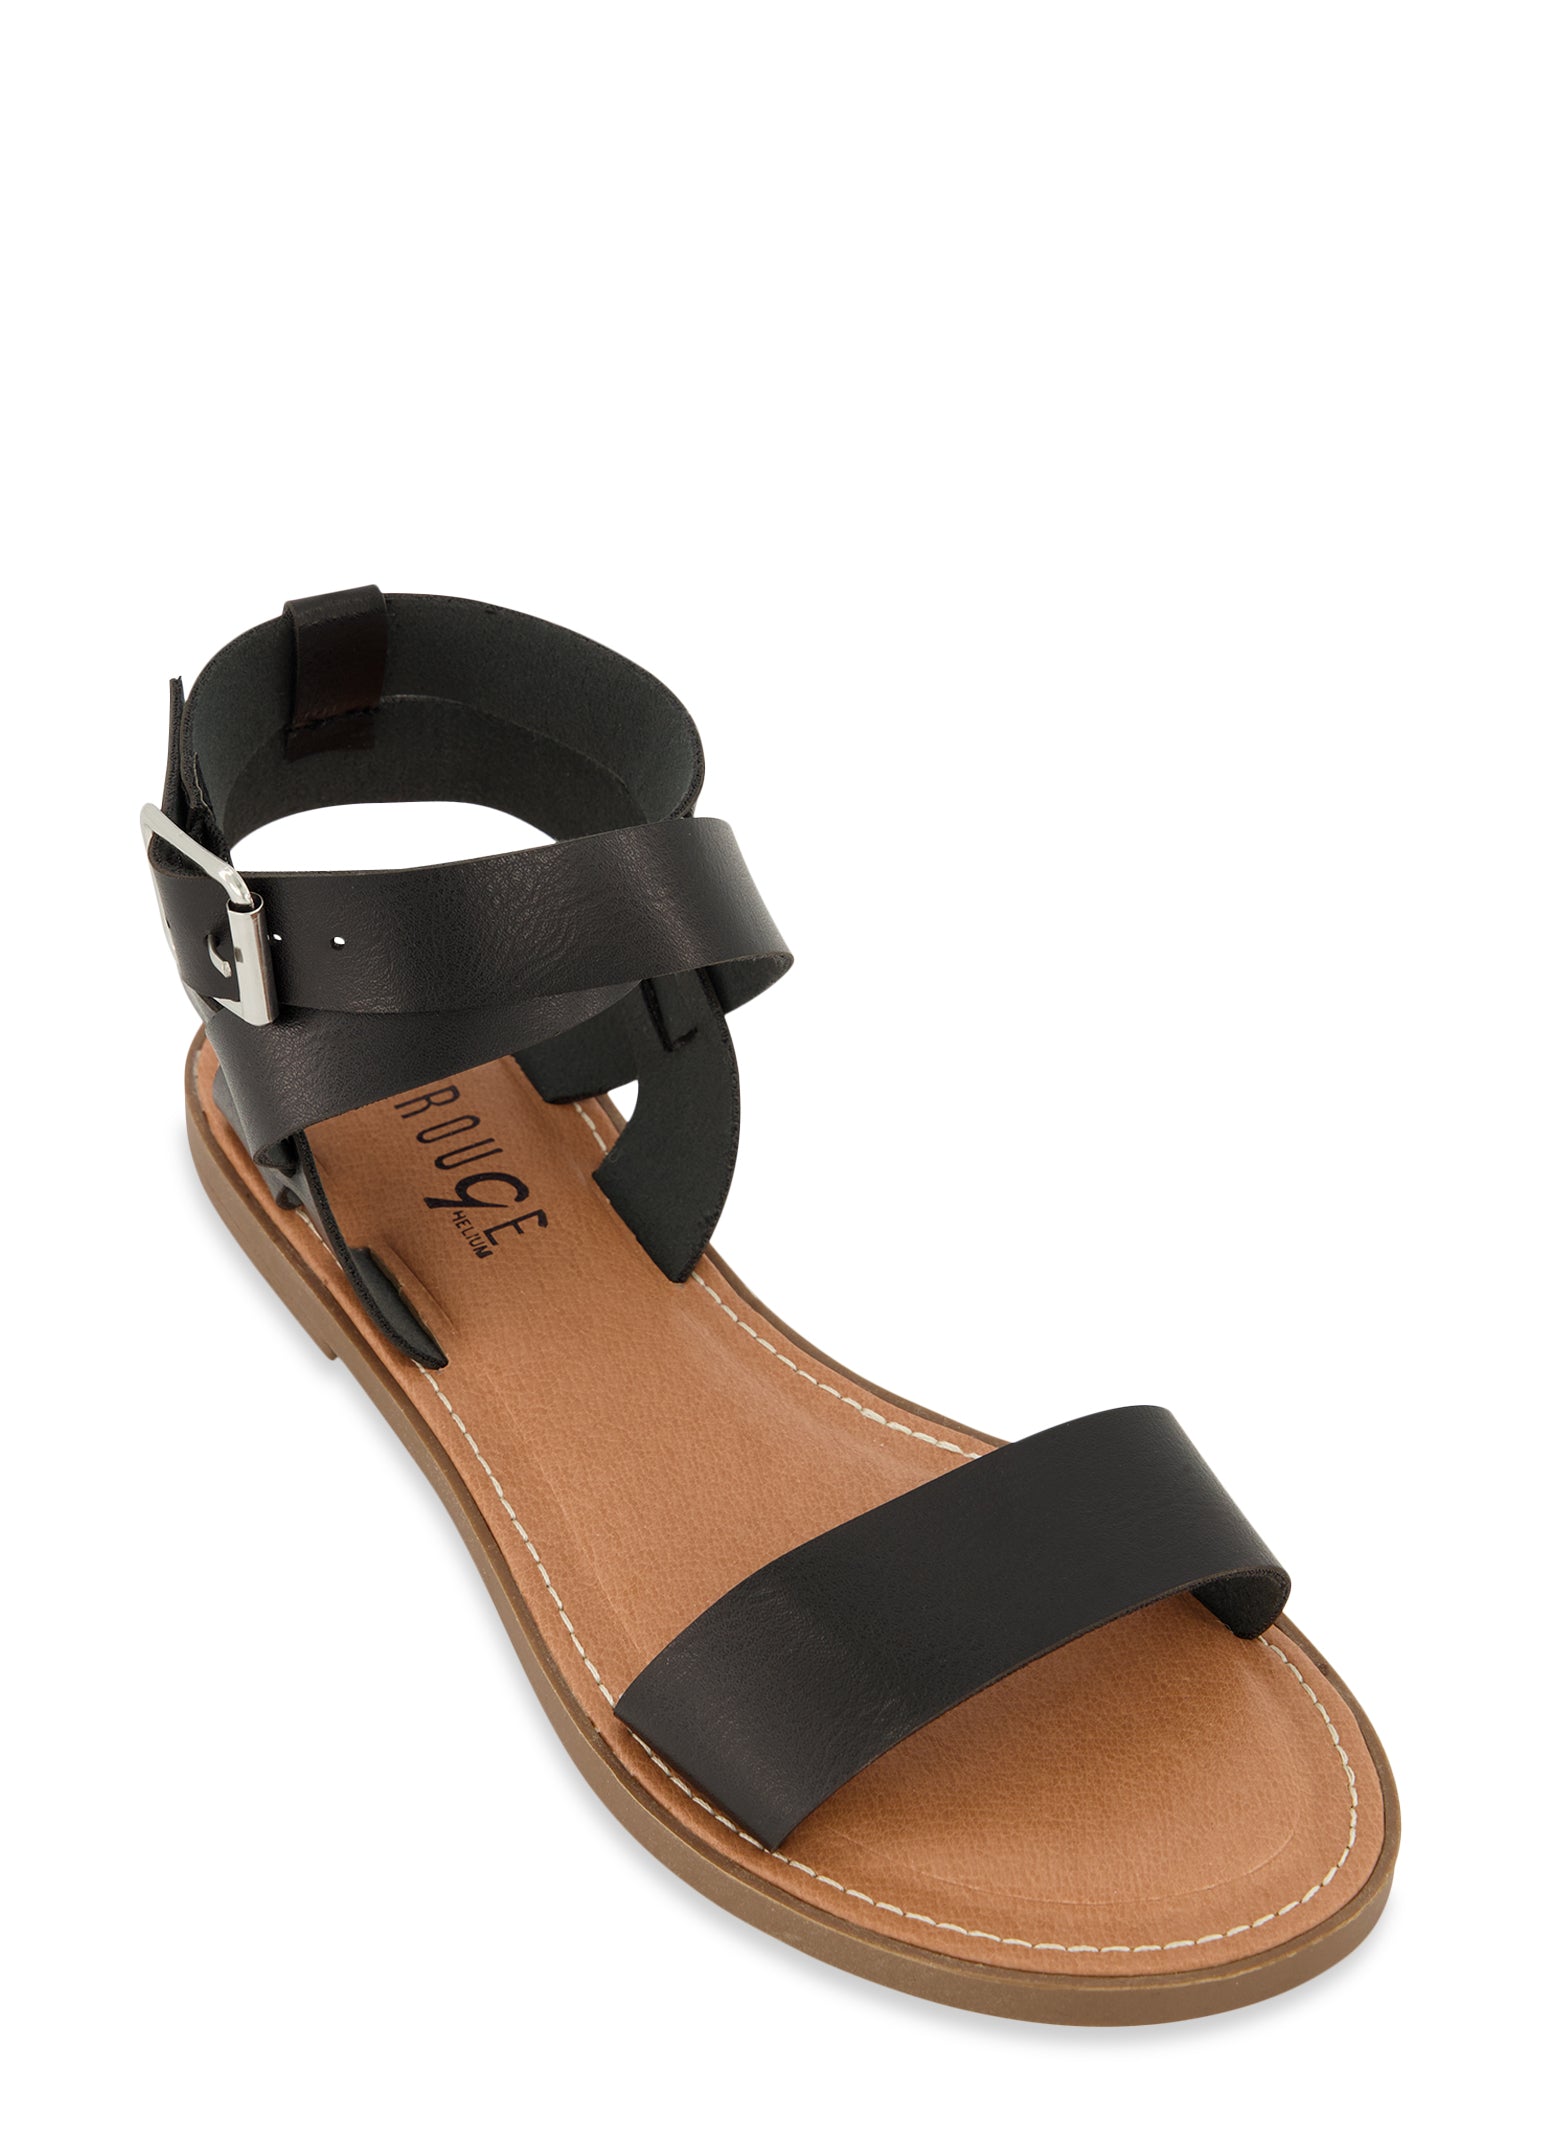 Petite Jolie Crisscross Ankle Strap Buckled Platform Sandals - Black